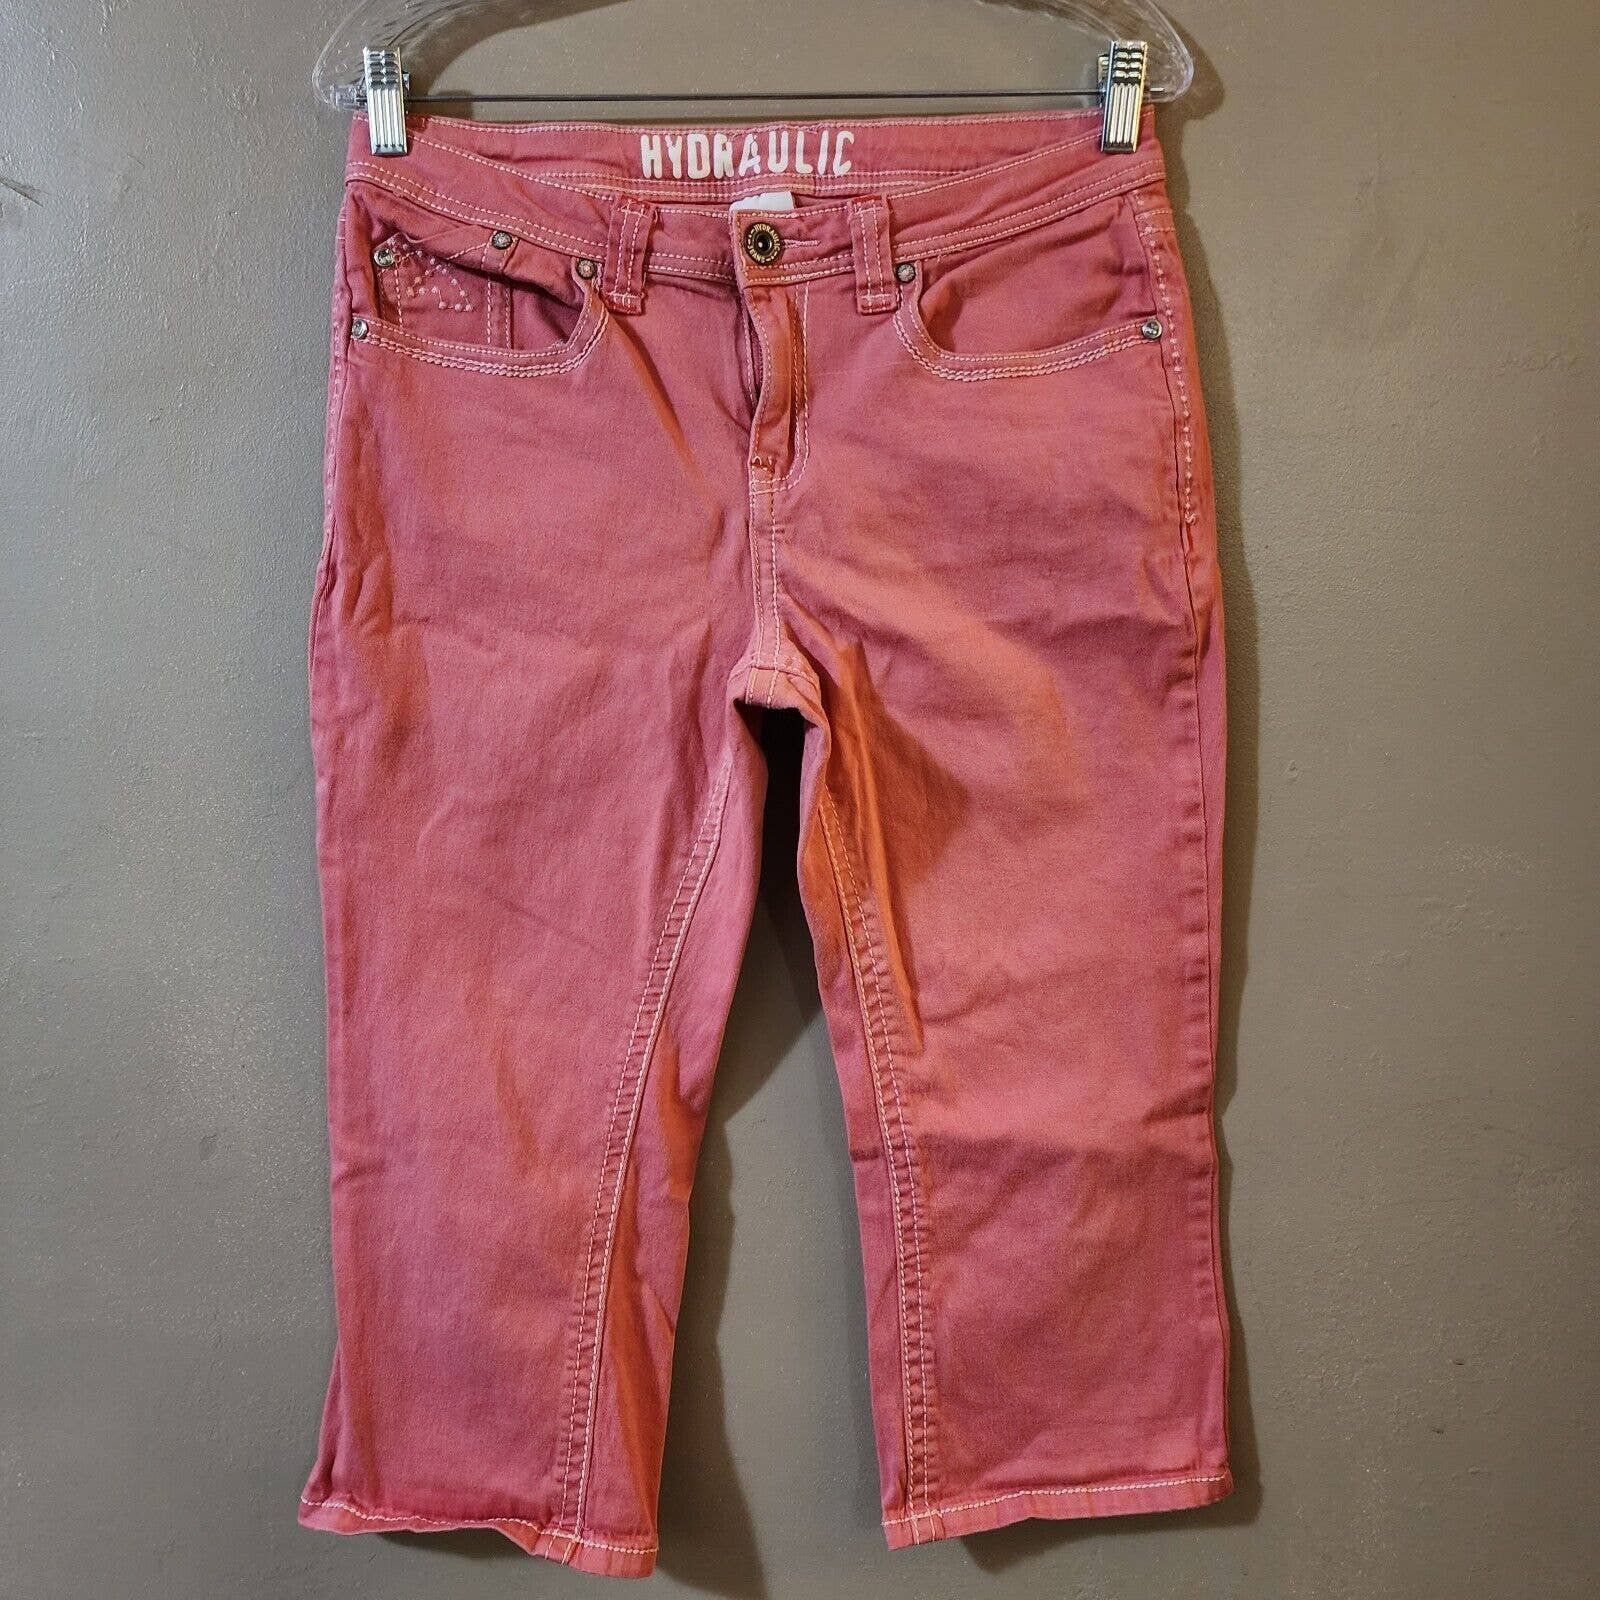 Affordable Hydraulic Womens Capri Jeans Size 10 Pink Mid Rise Straight Leg Stretch fVbT08h7A High Quaity